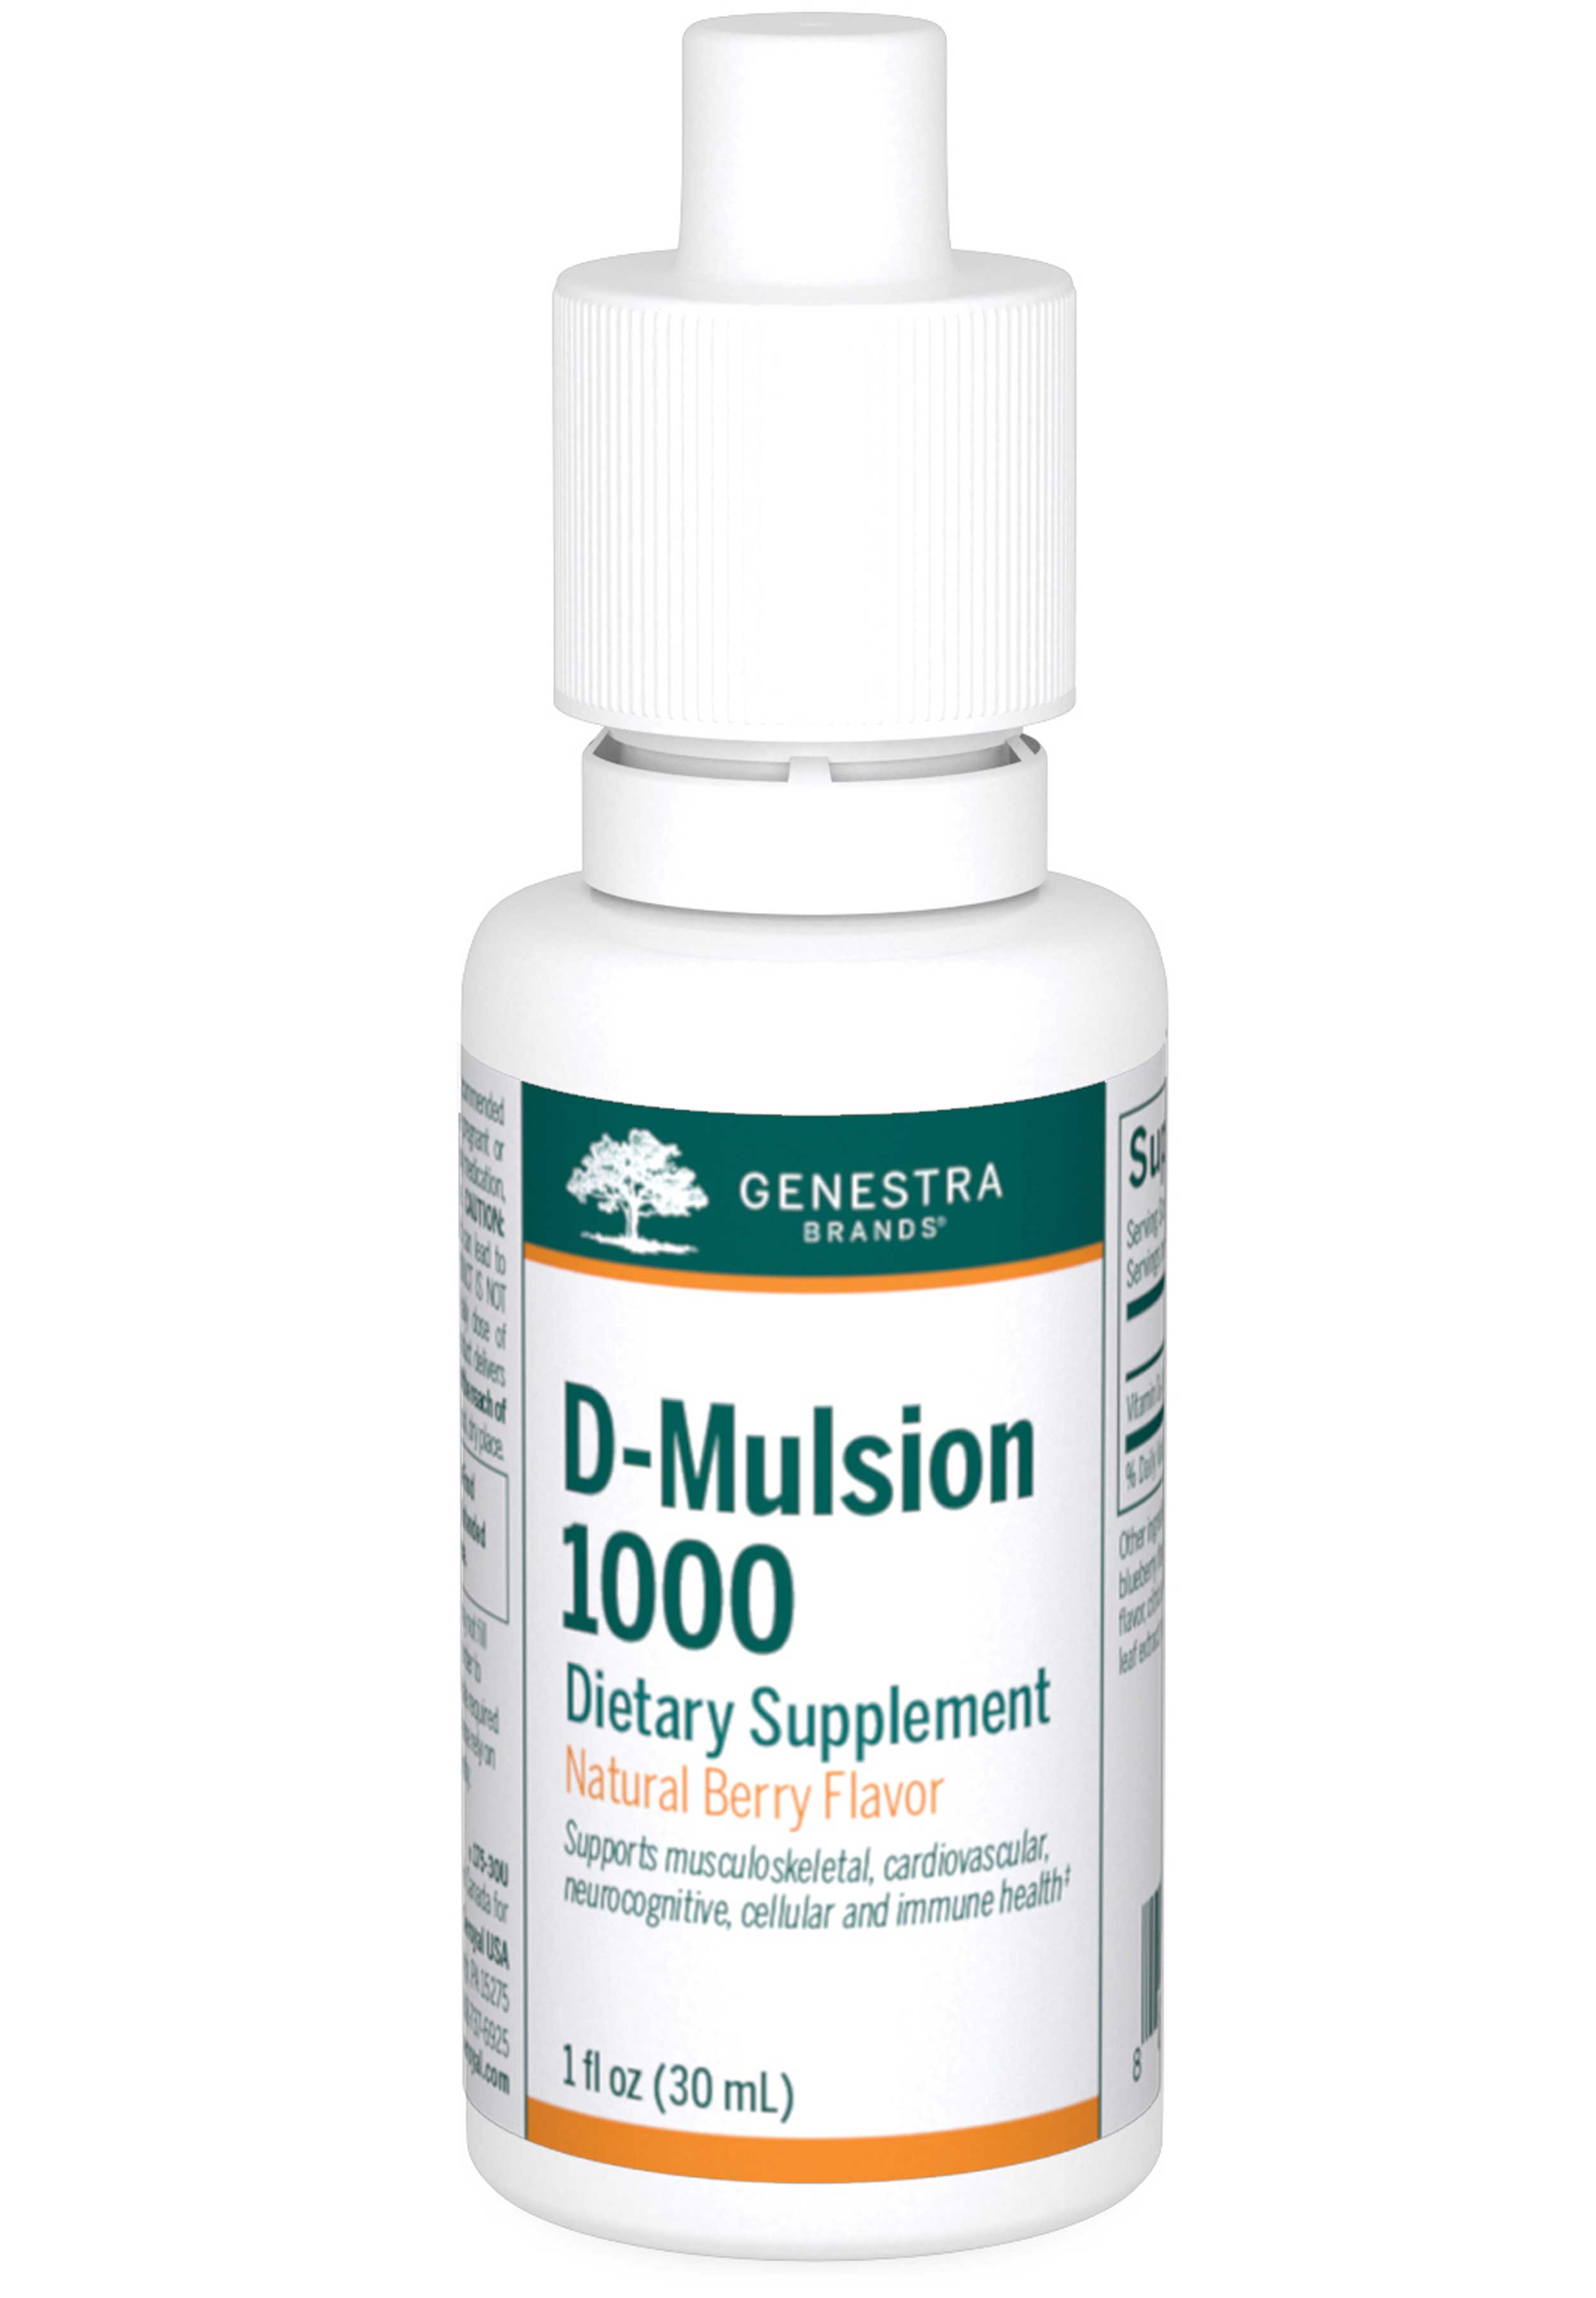 Genestra Brands D-Mulsion 1000 (Berry)